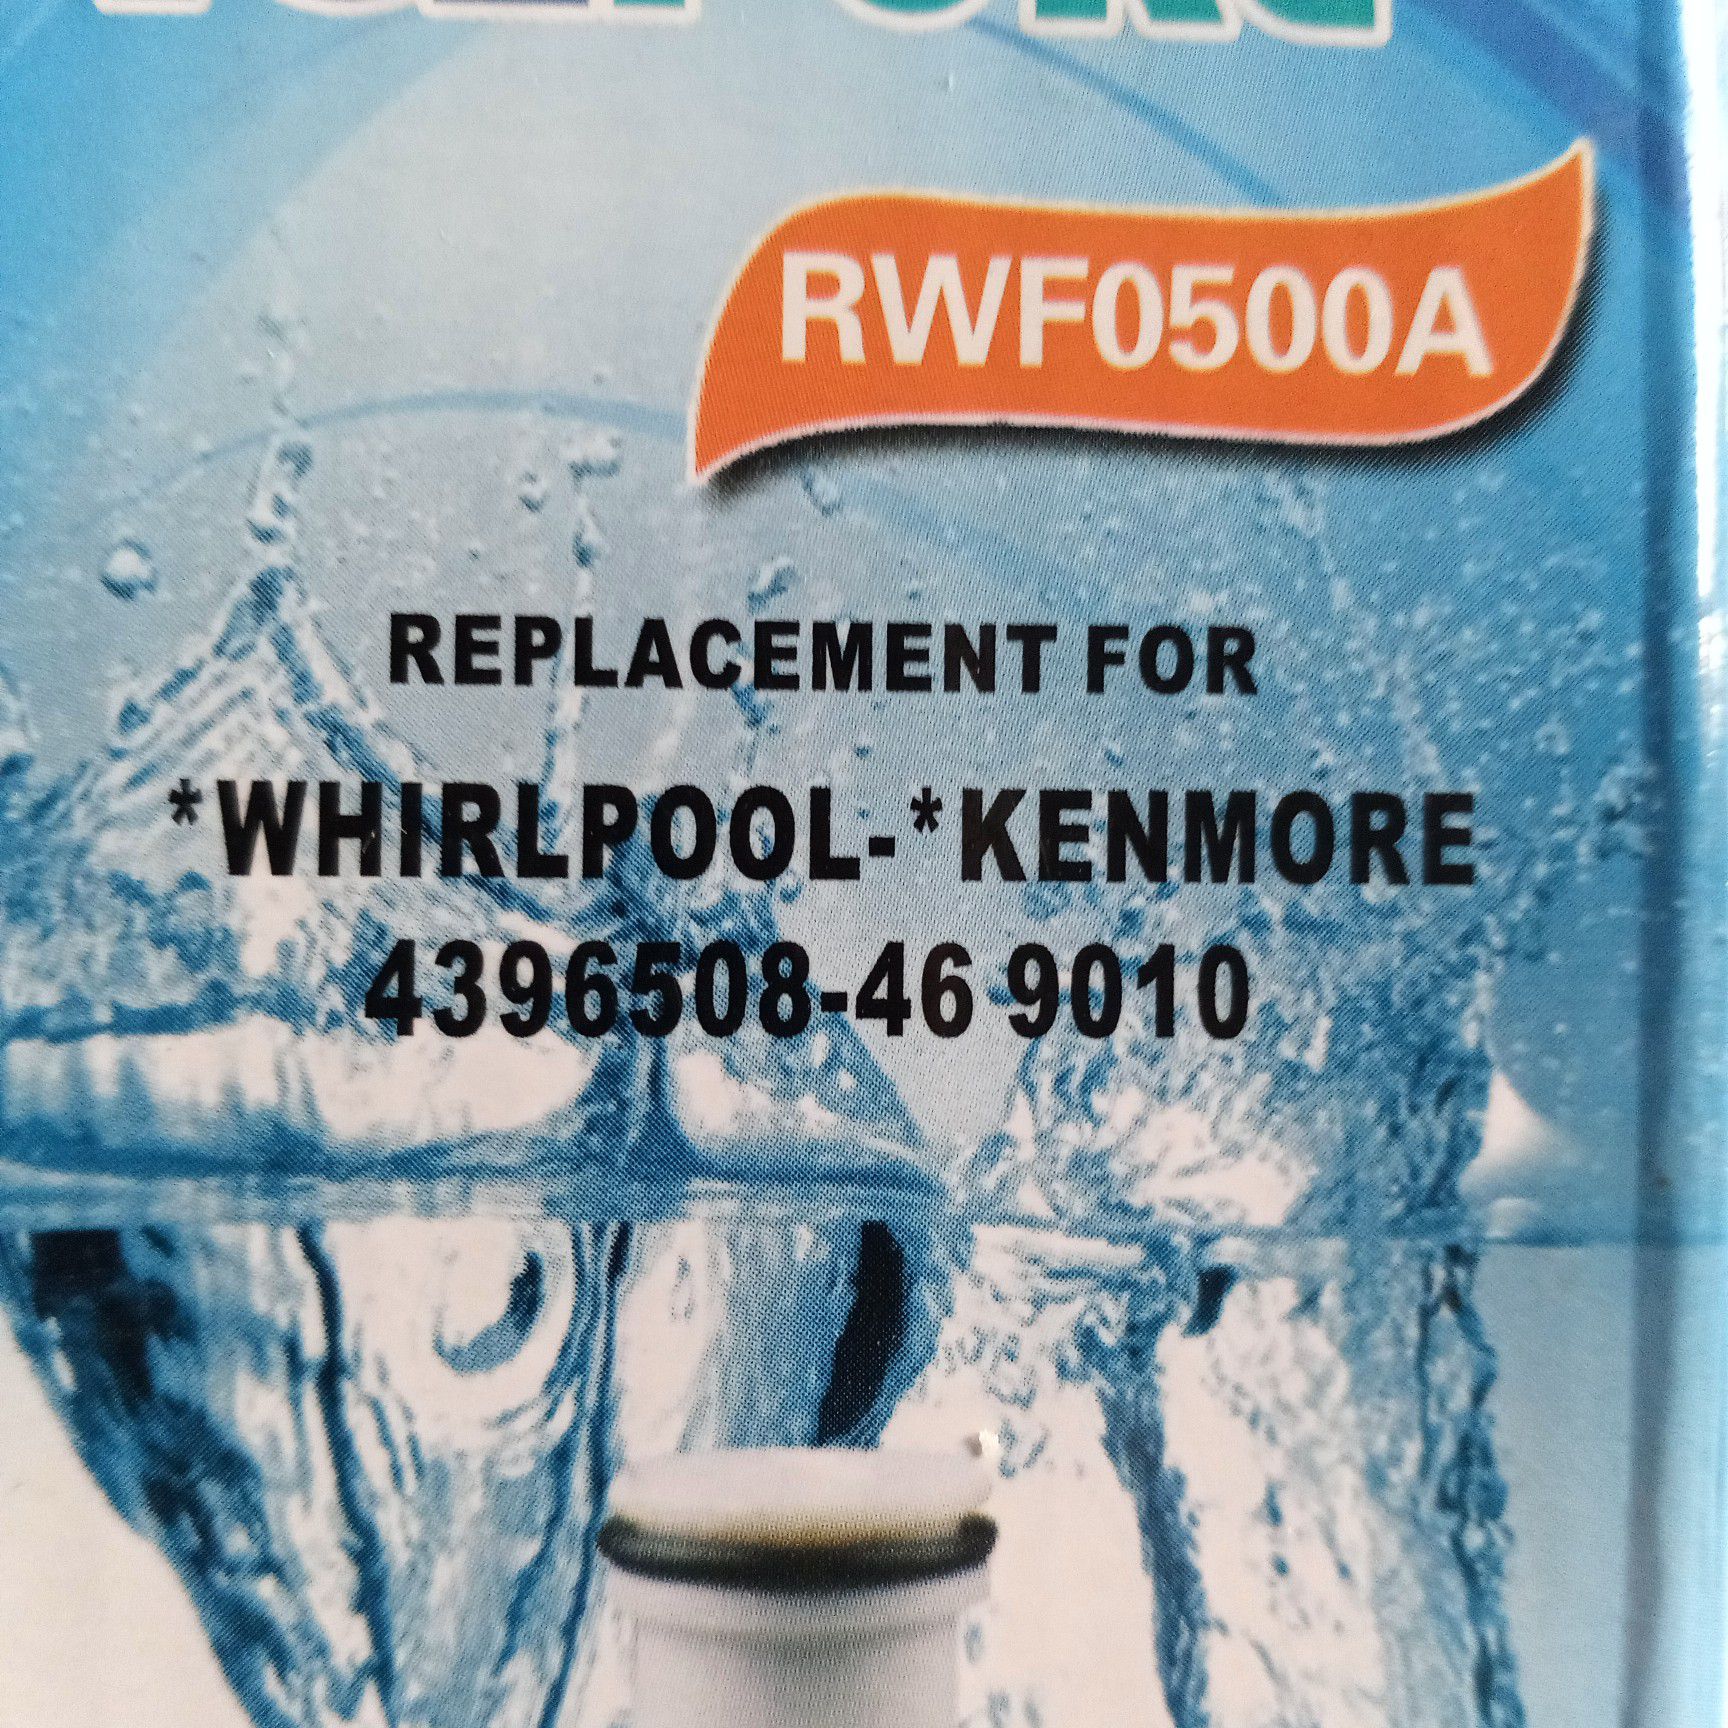 Refrigerator water filter. Whirlpool/ Kenmore